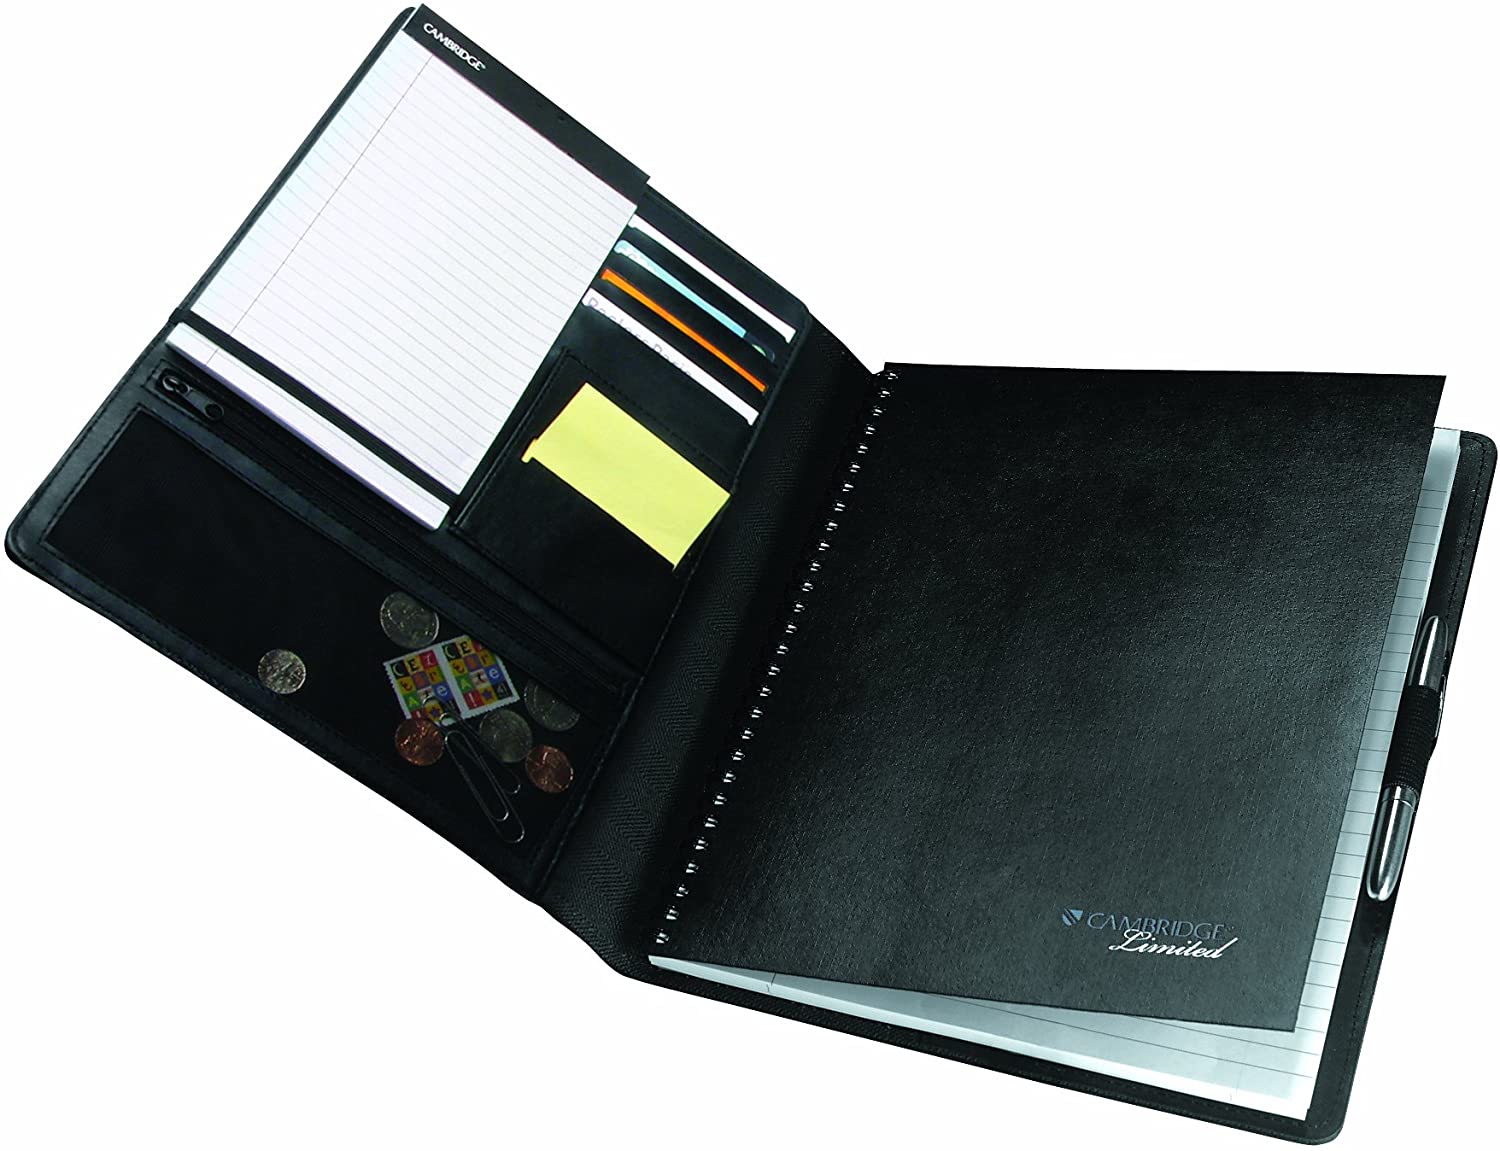 Cambridge Limited NoteTaker Notebook